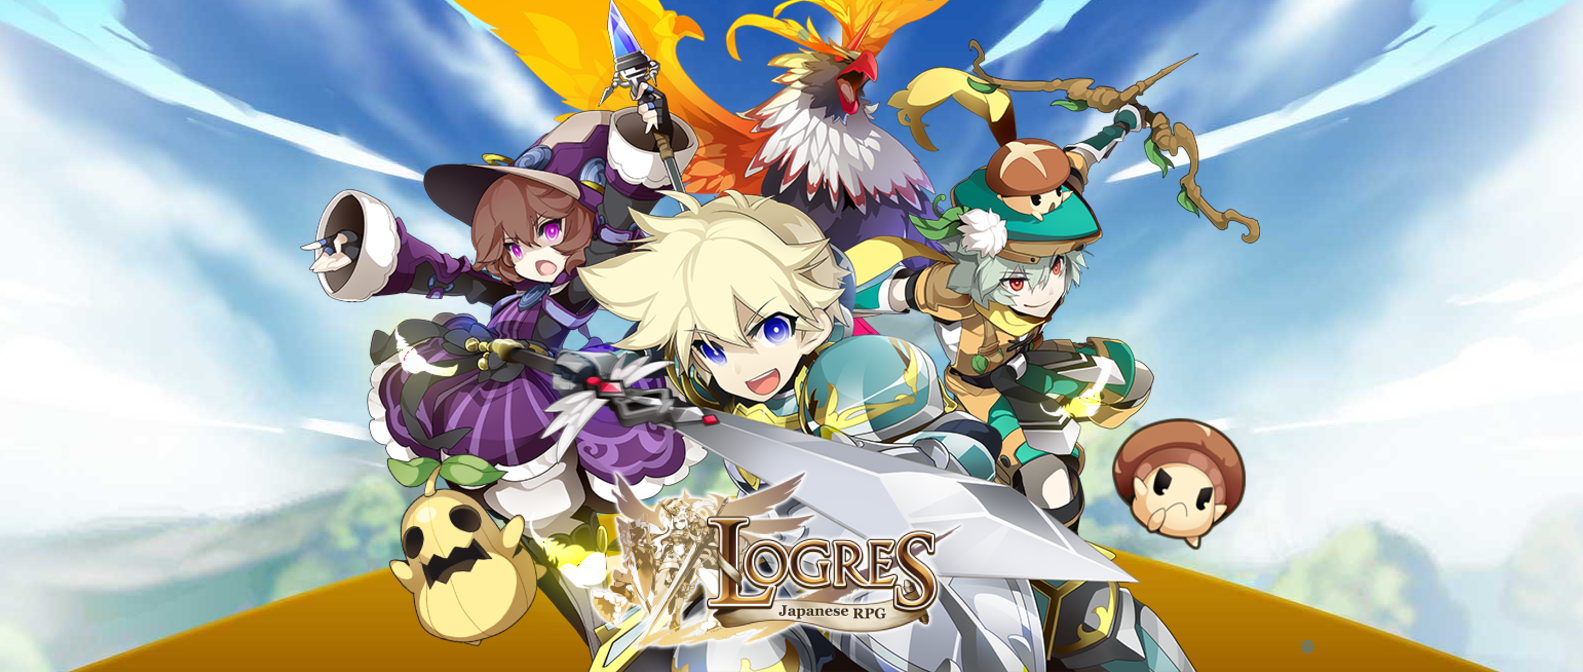 Mobile Game “Logres: Japanese RPG” goes Global